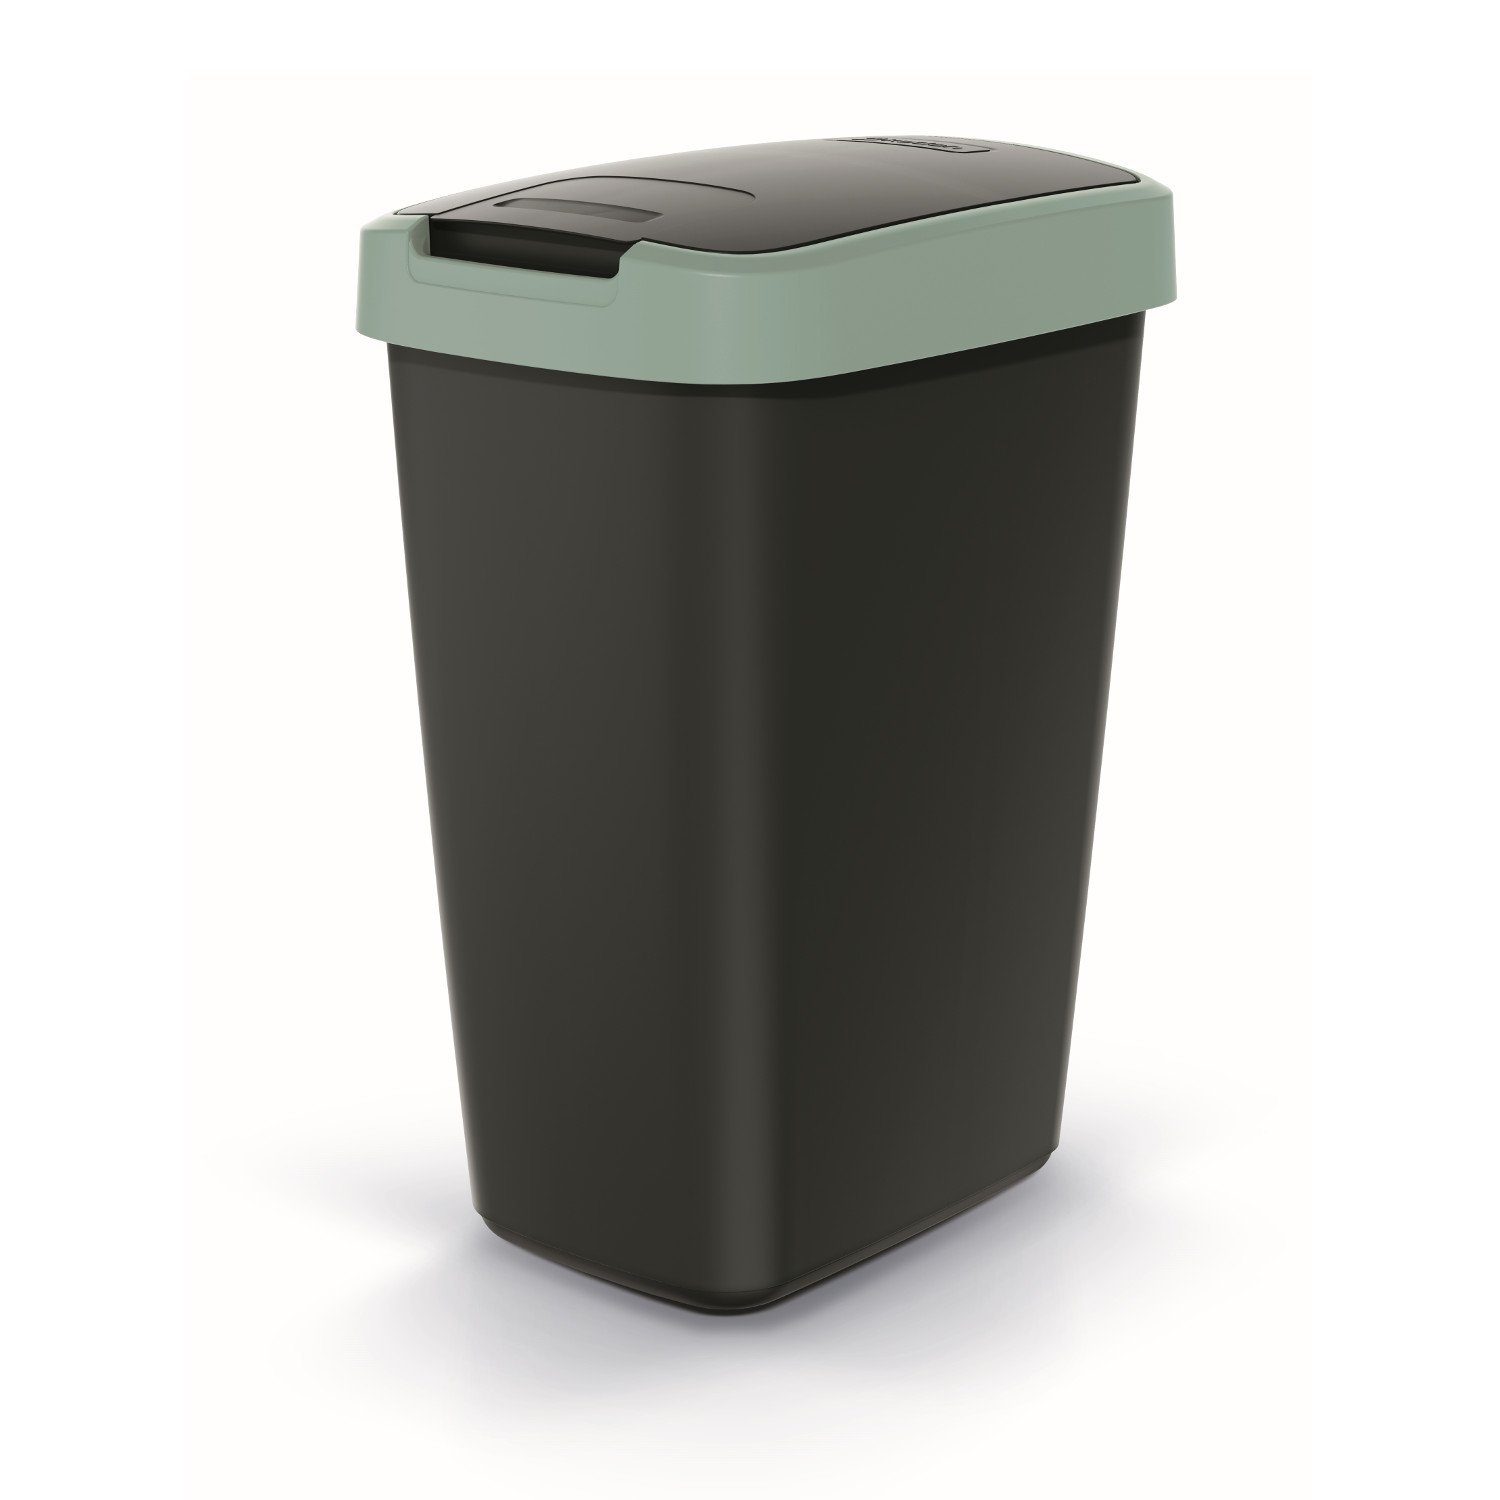 KEDEN Grün Q mit Compacta Deckel Mülleimer Keden Q, 12l Abfallbehälter COMPACTA